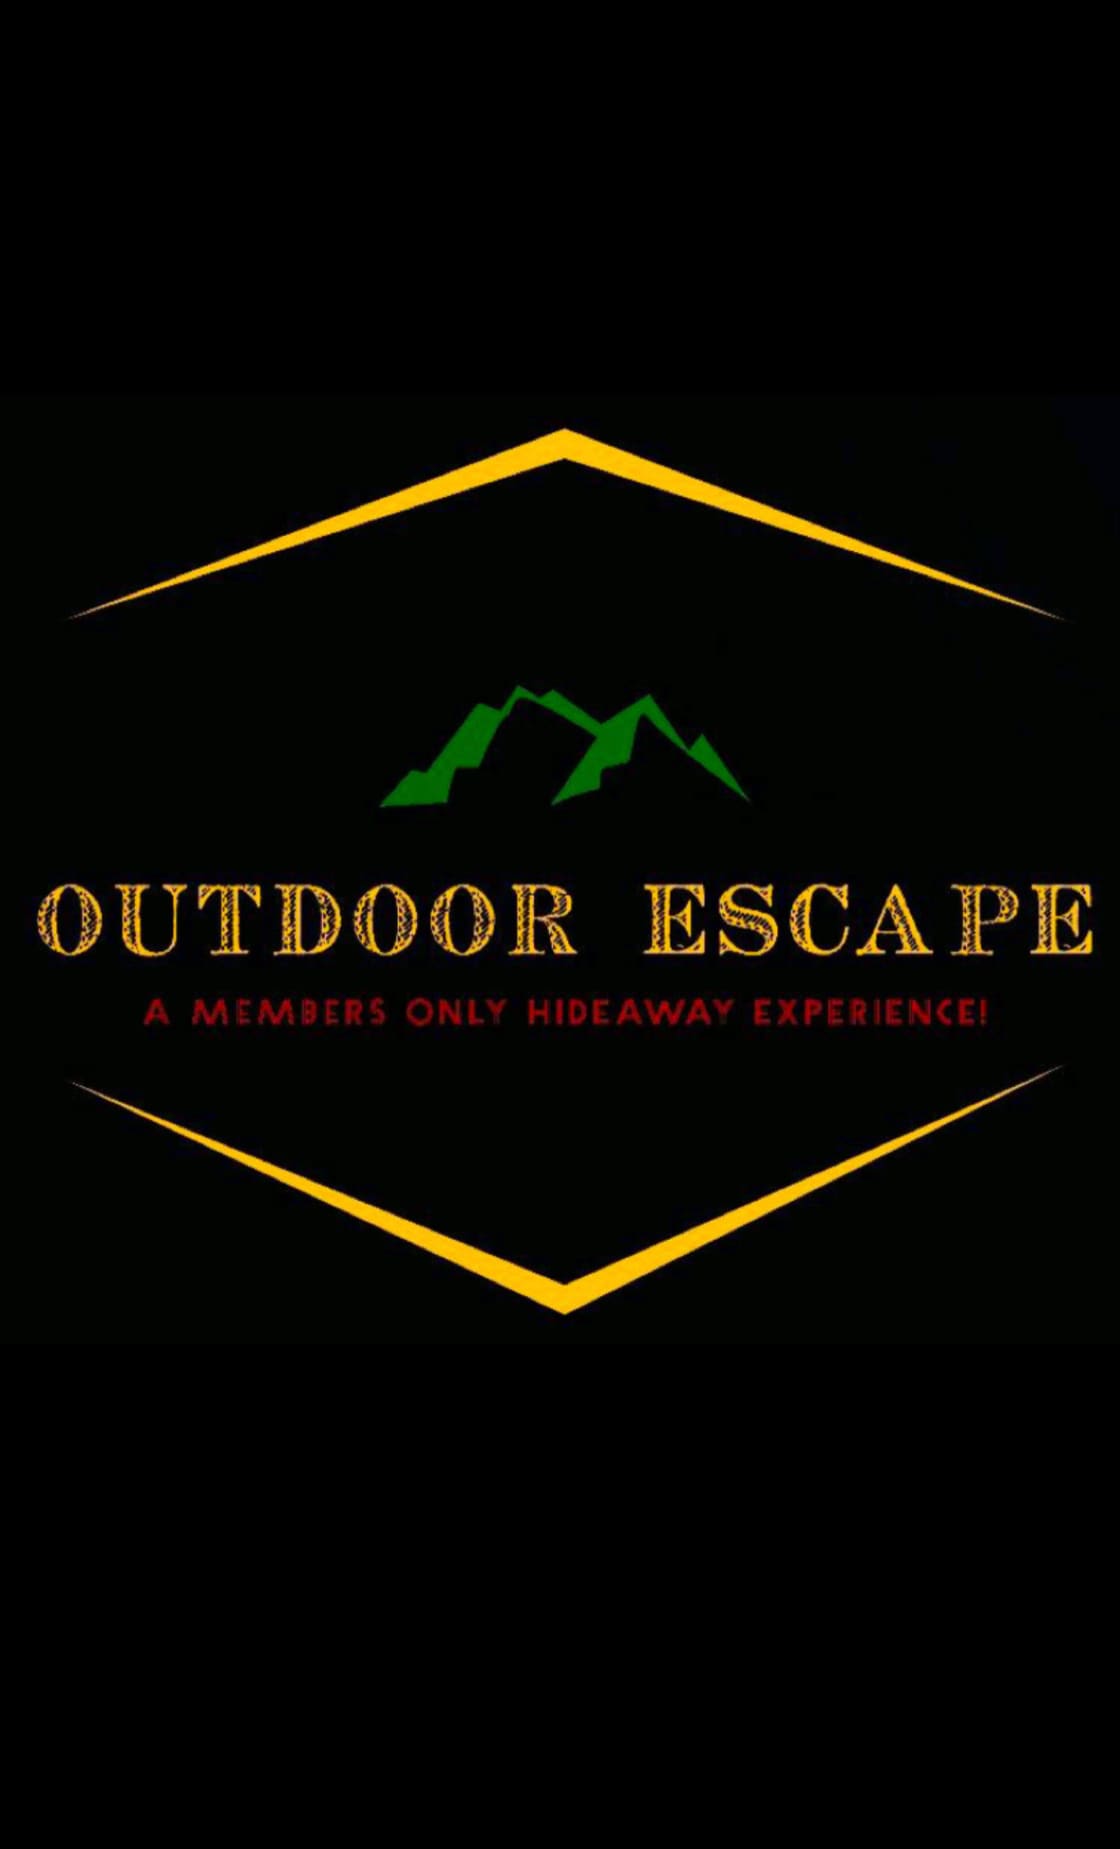 Outdoor Escape Experience